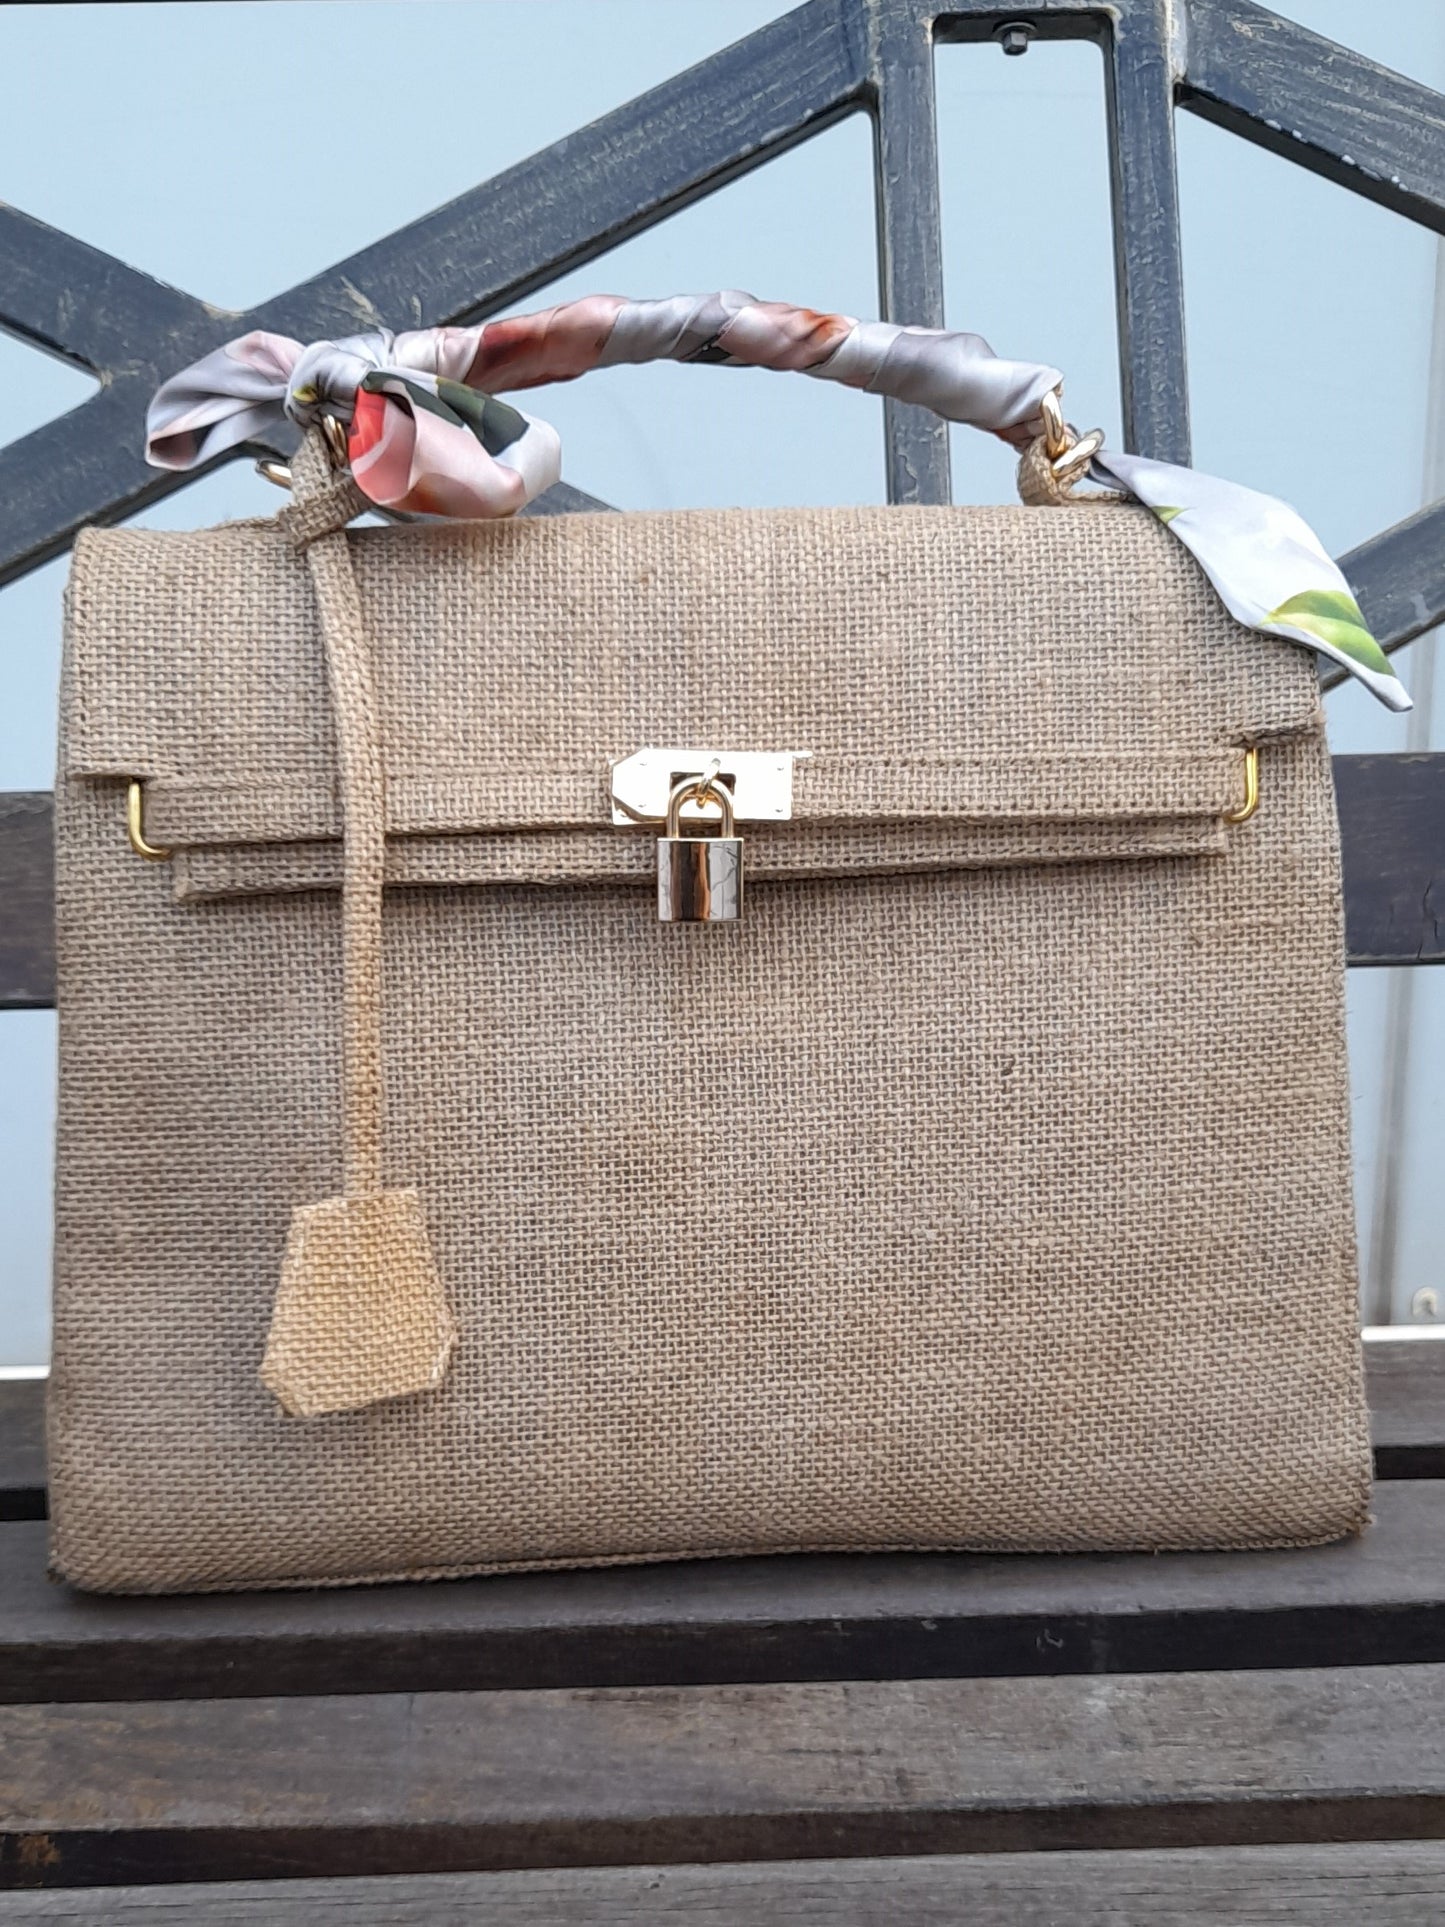 Handmade burlap / jute bag, Medium size (35cm)_style 1 - Gold